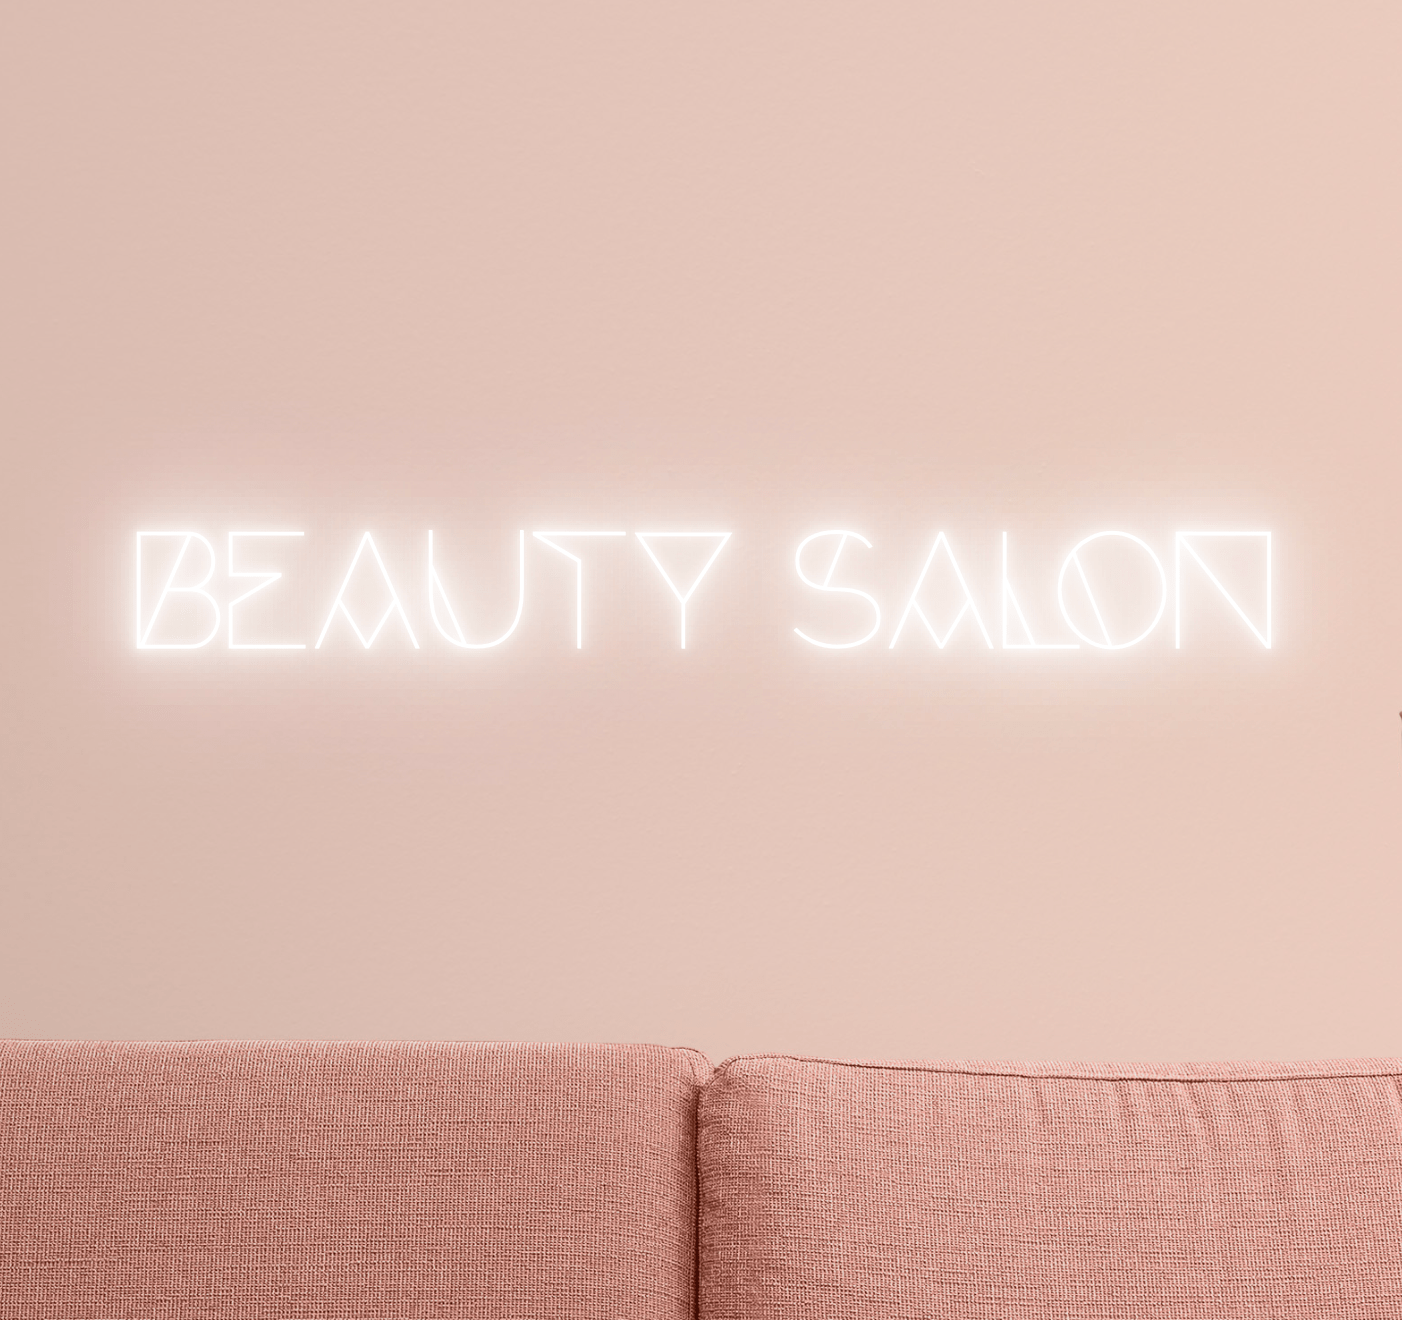 Beauty Salon Neon Sign 80cm